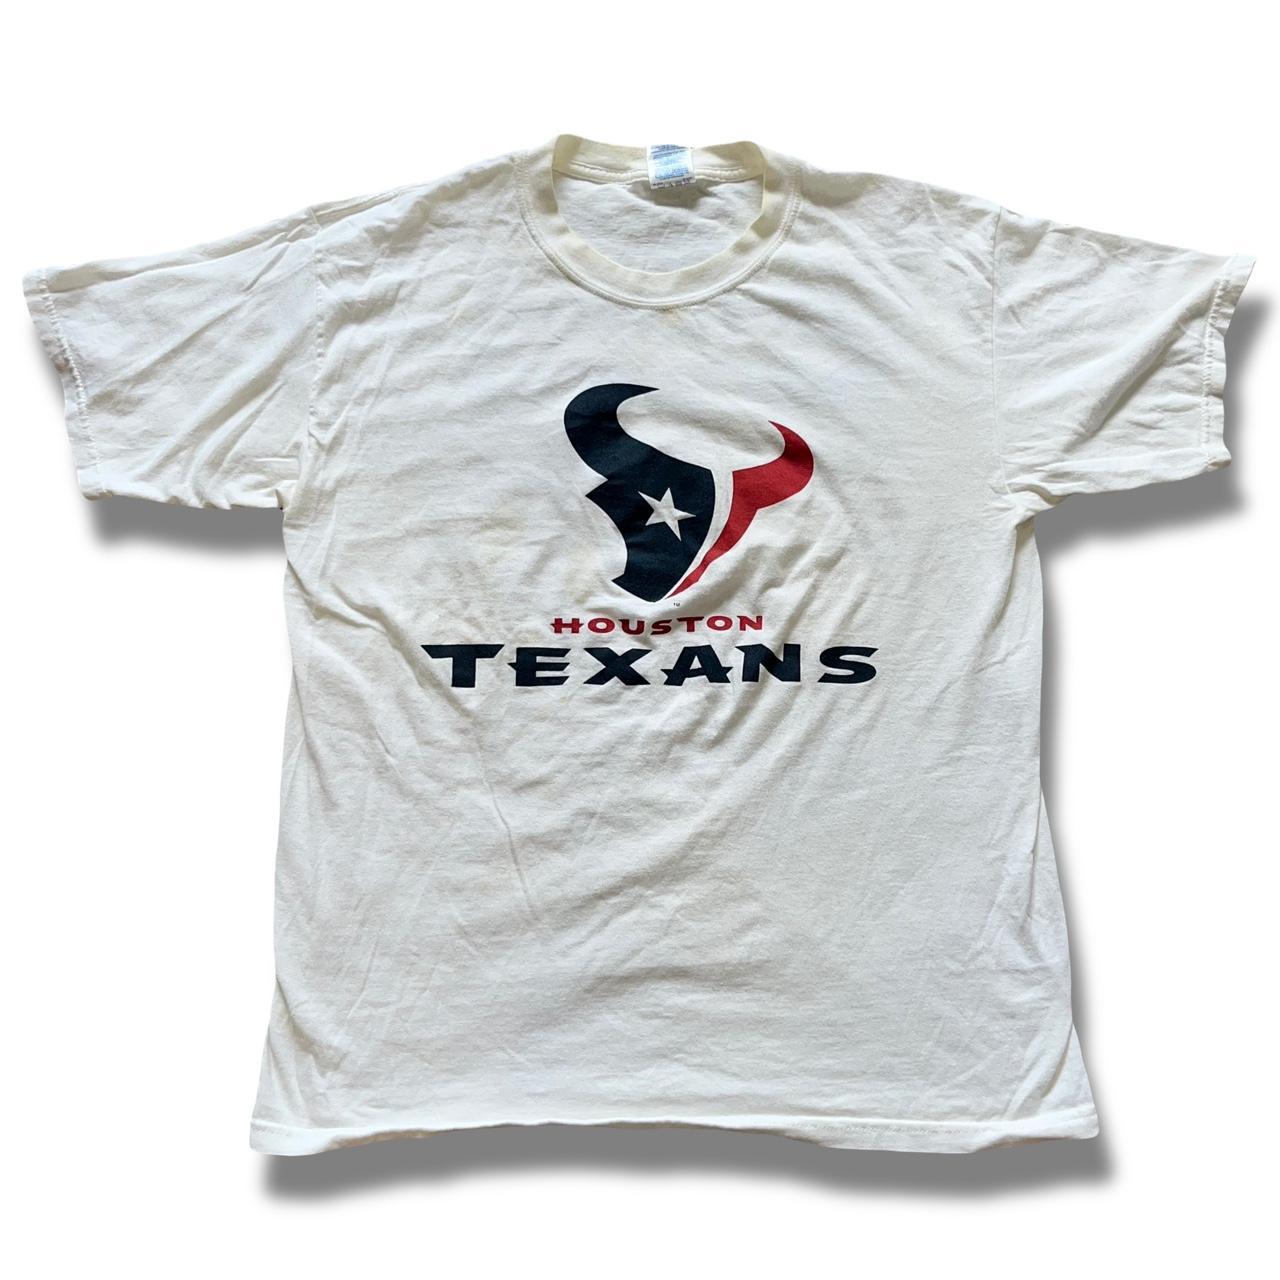 Vintage Houston Texans y2k t shirt, Super cute y2k